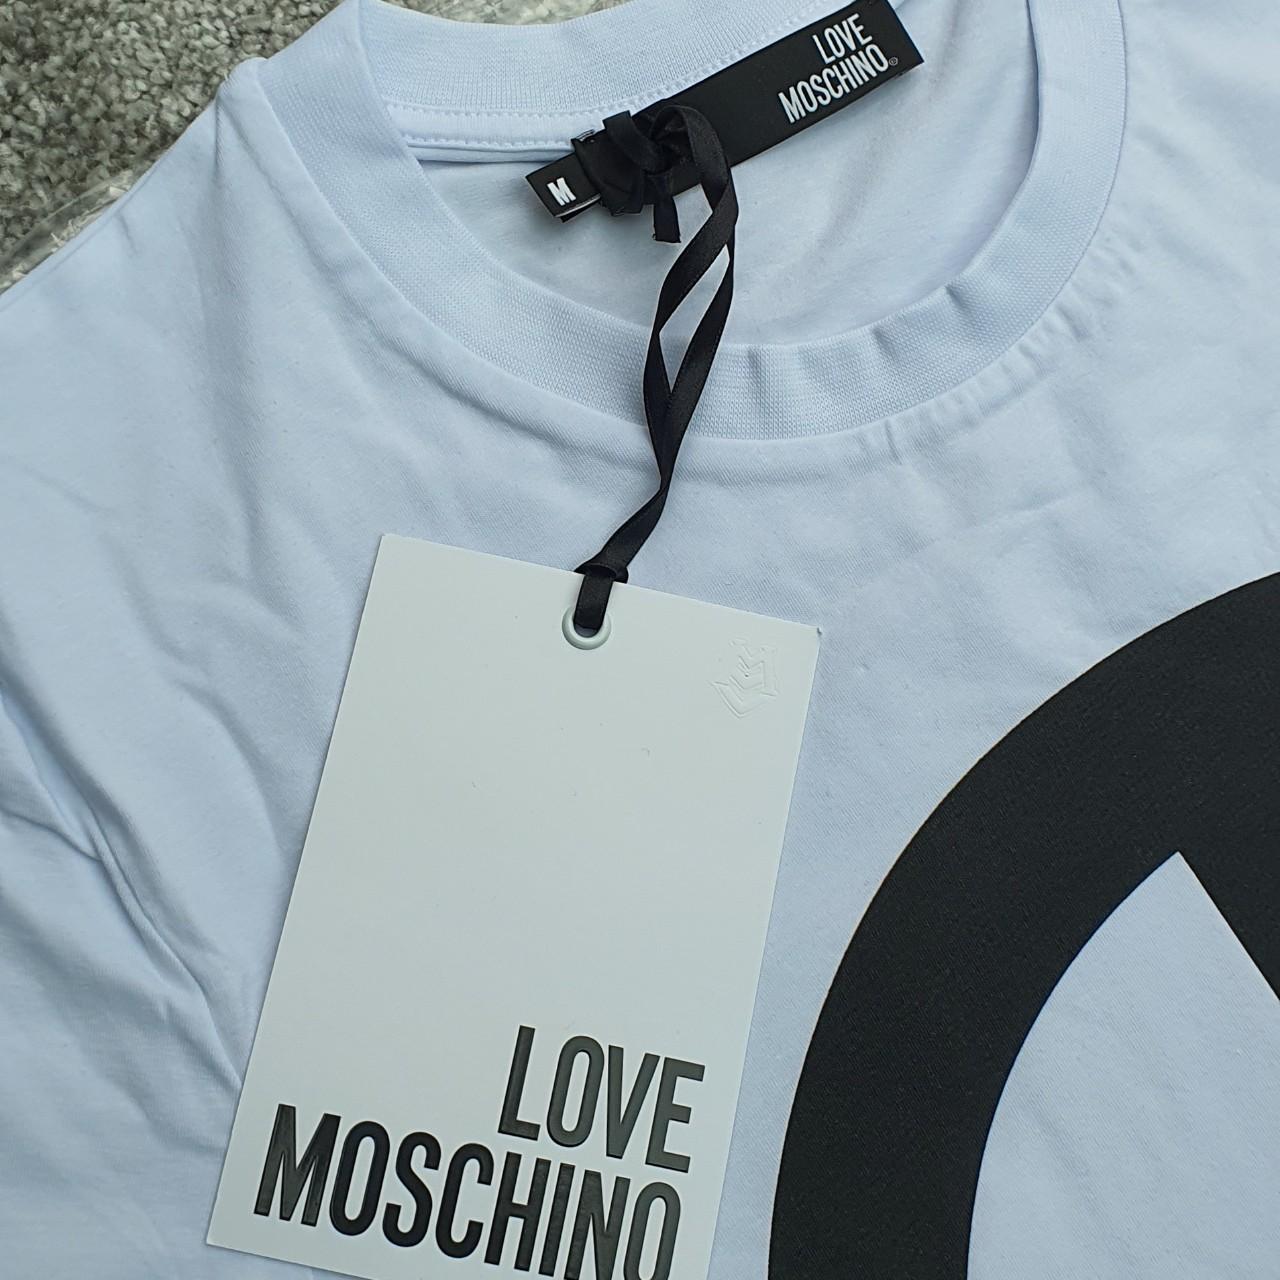 Moschino T Shirt (Love Moschino) ☮♠️ Lovely Piece, - Depop